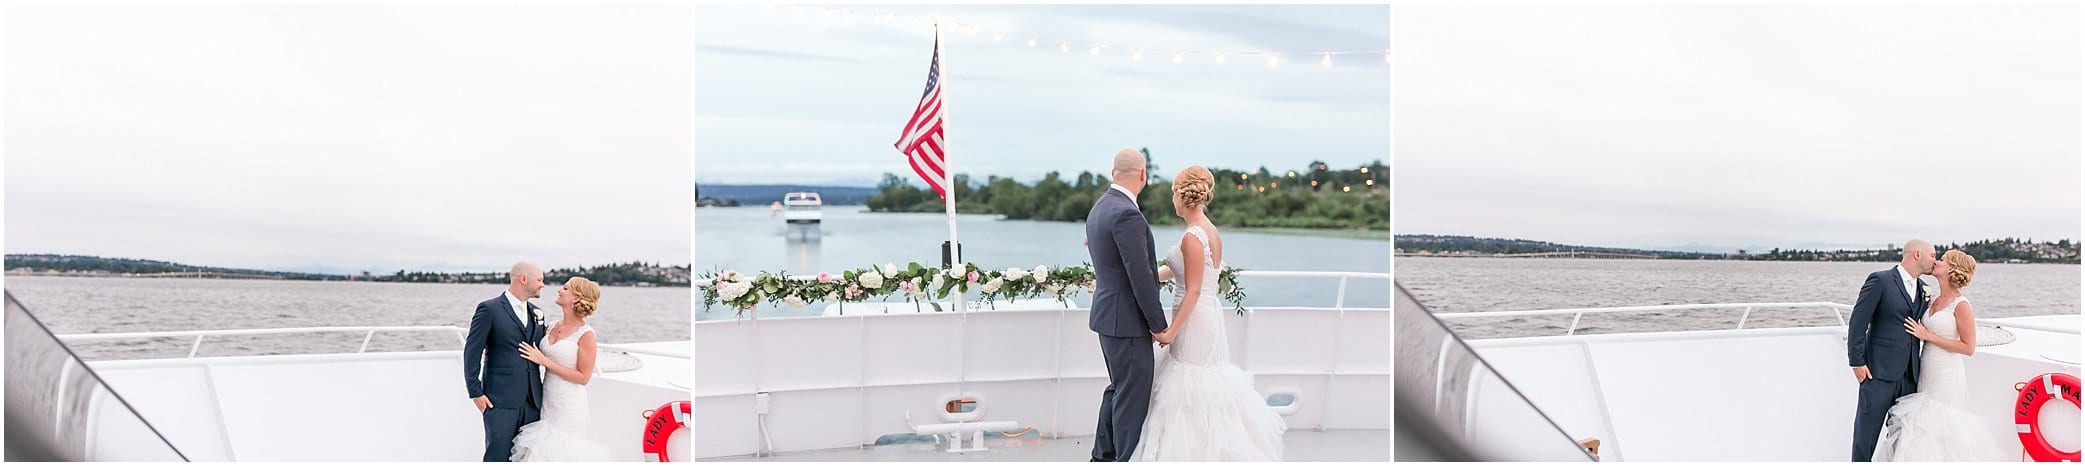 wedding day portraits on a boat